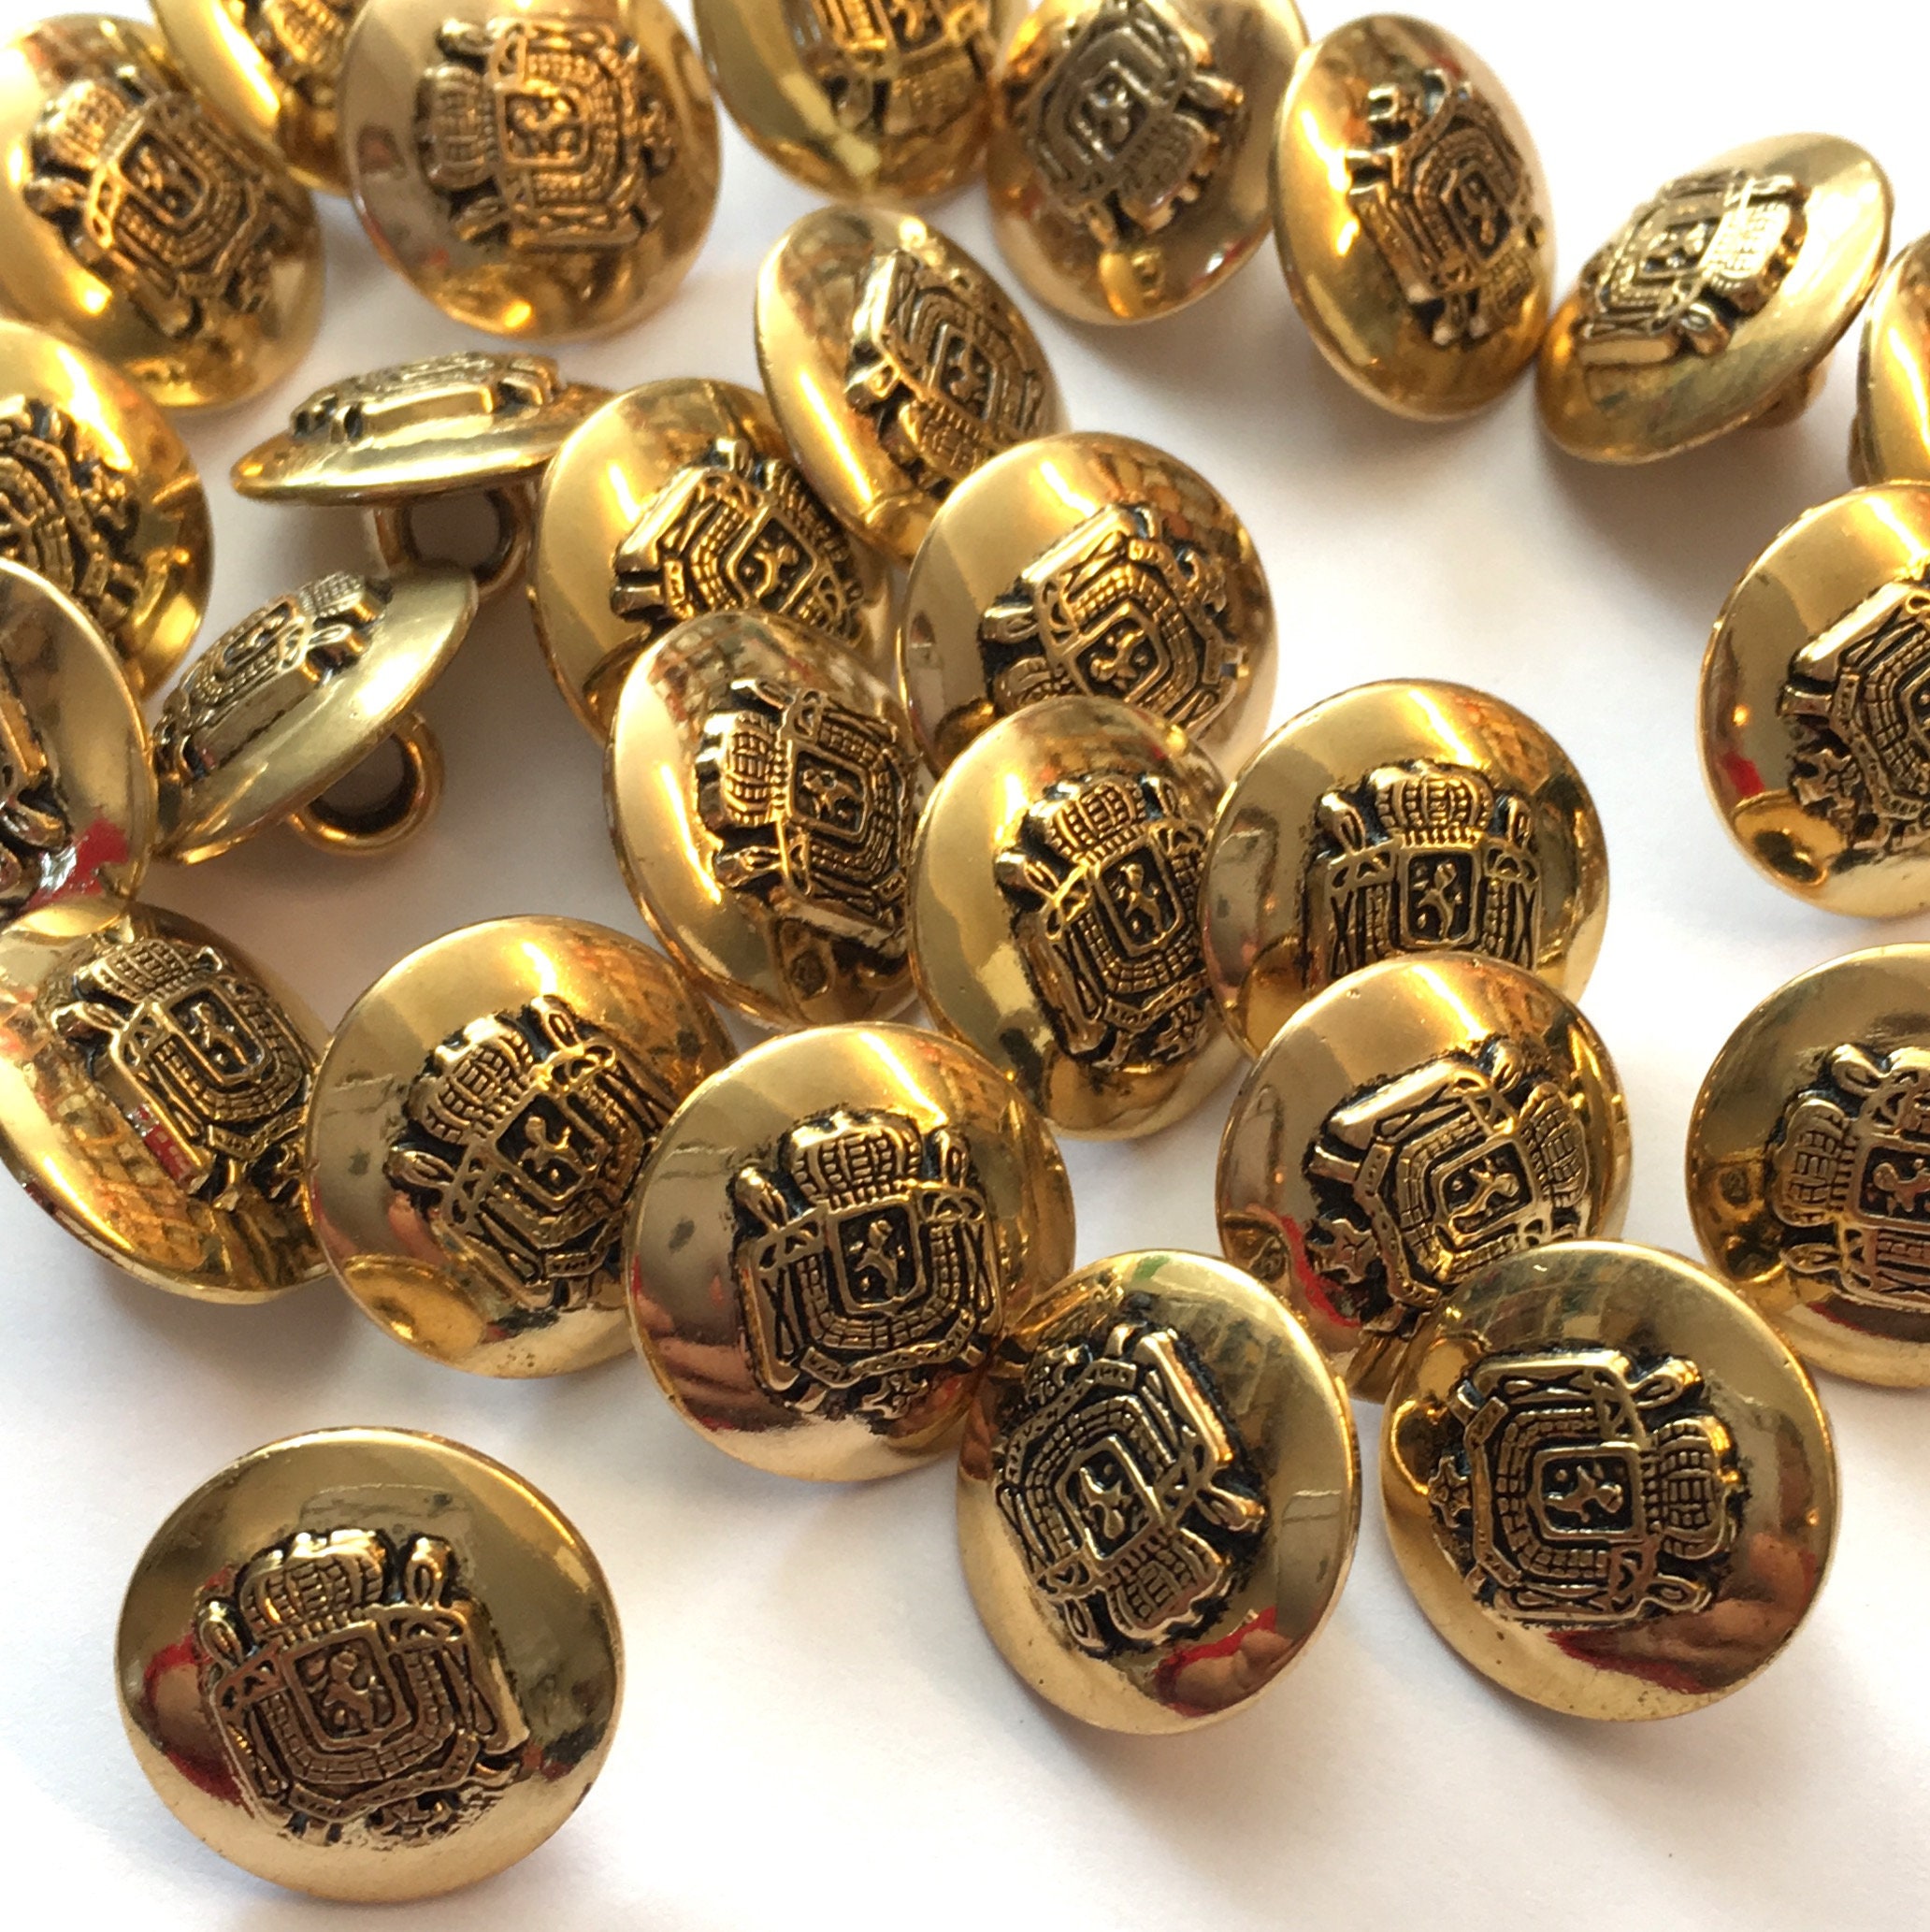 Botones dorados lisos 15mm